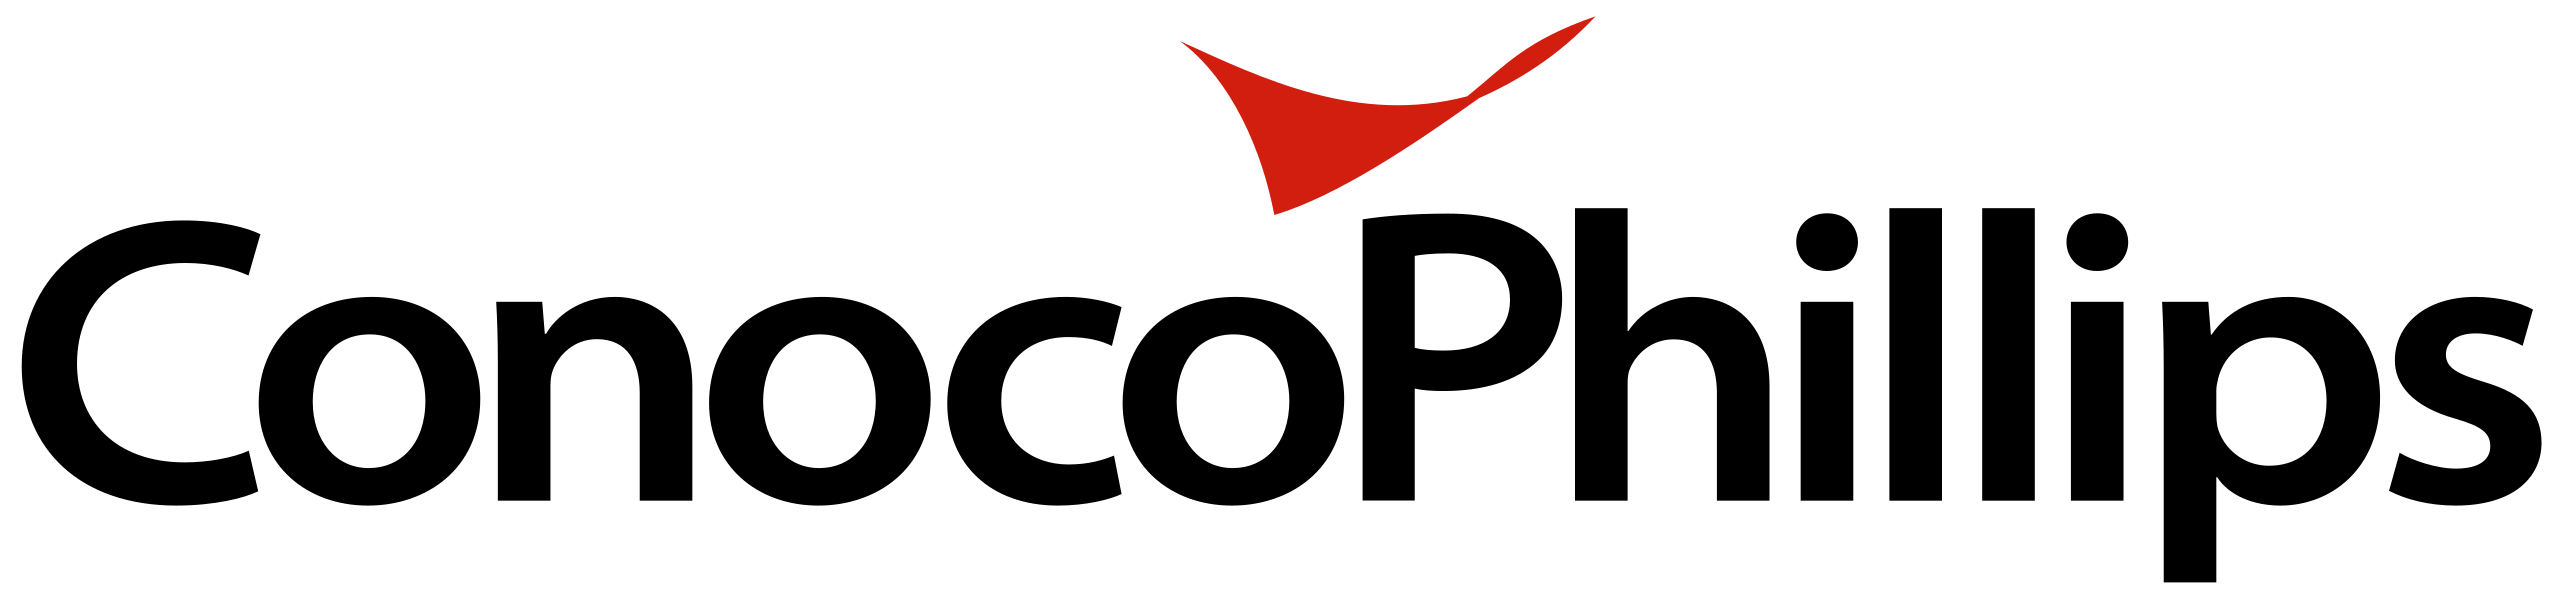 ConocoPhillips_Logo